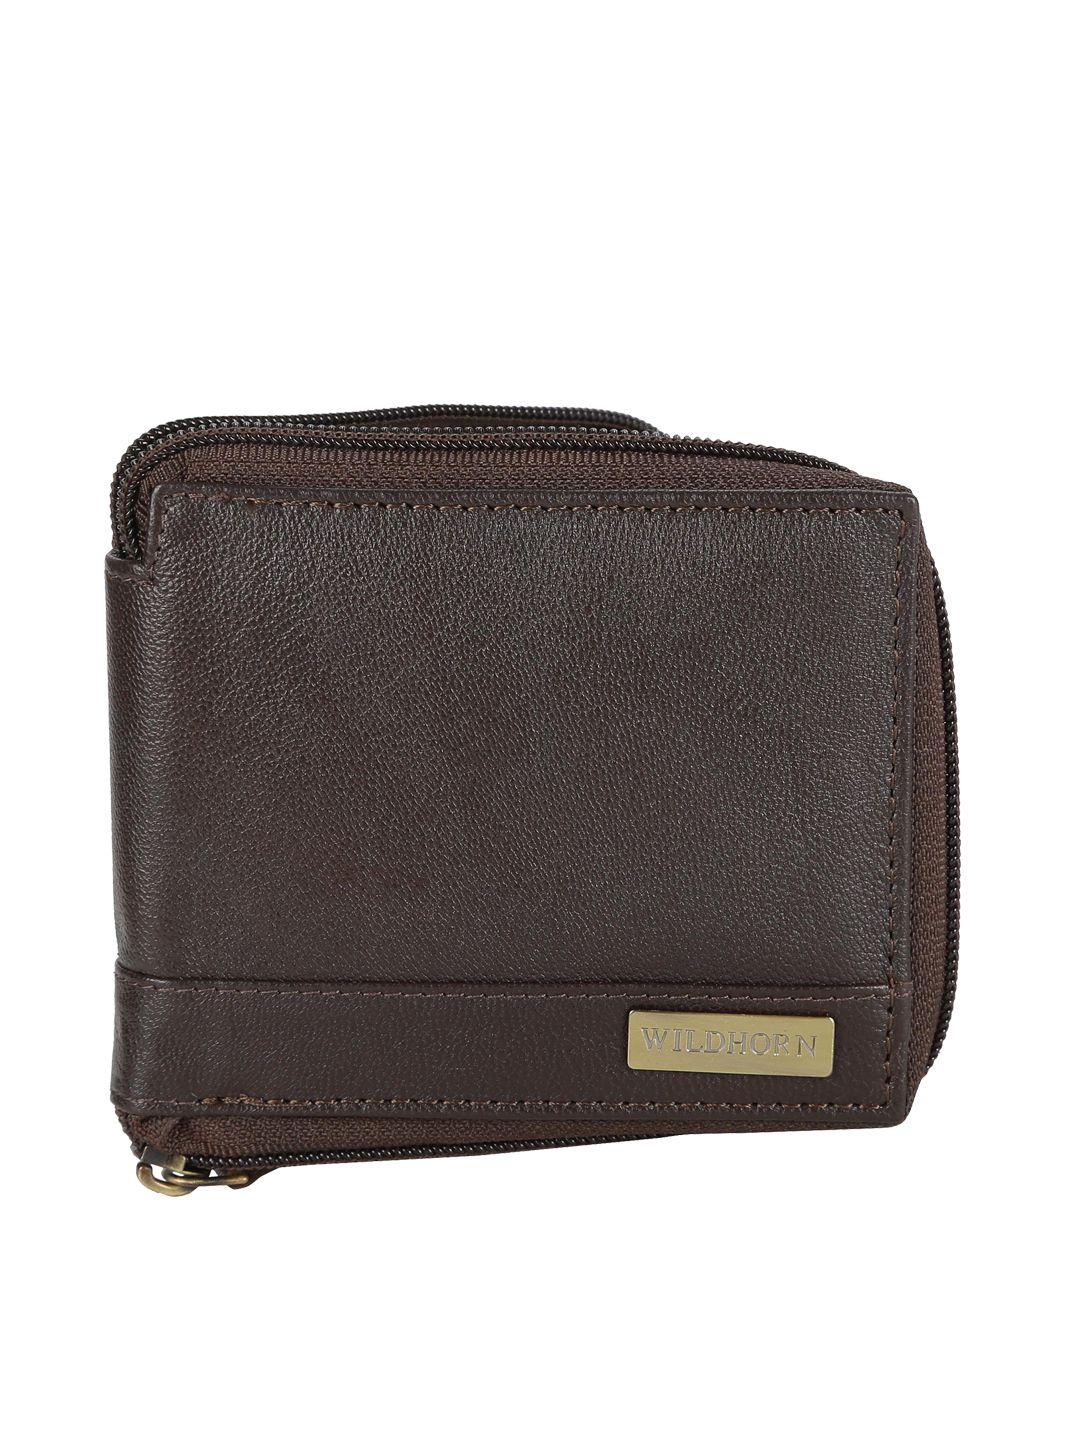 wildhorn men brown genuine leather wallet